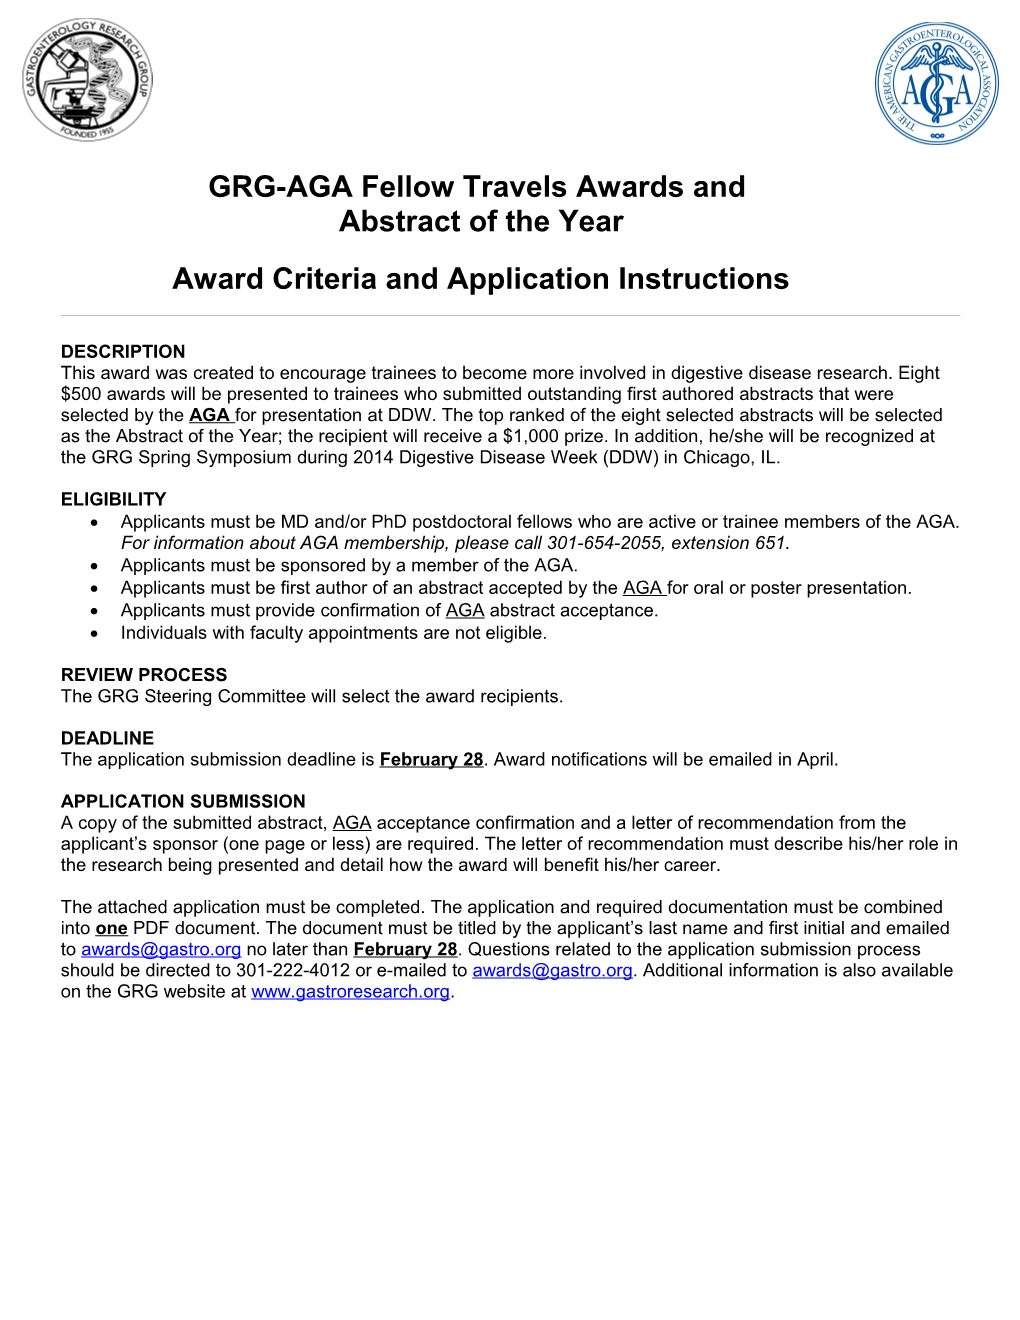 Application-GRG Travel Awards